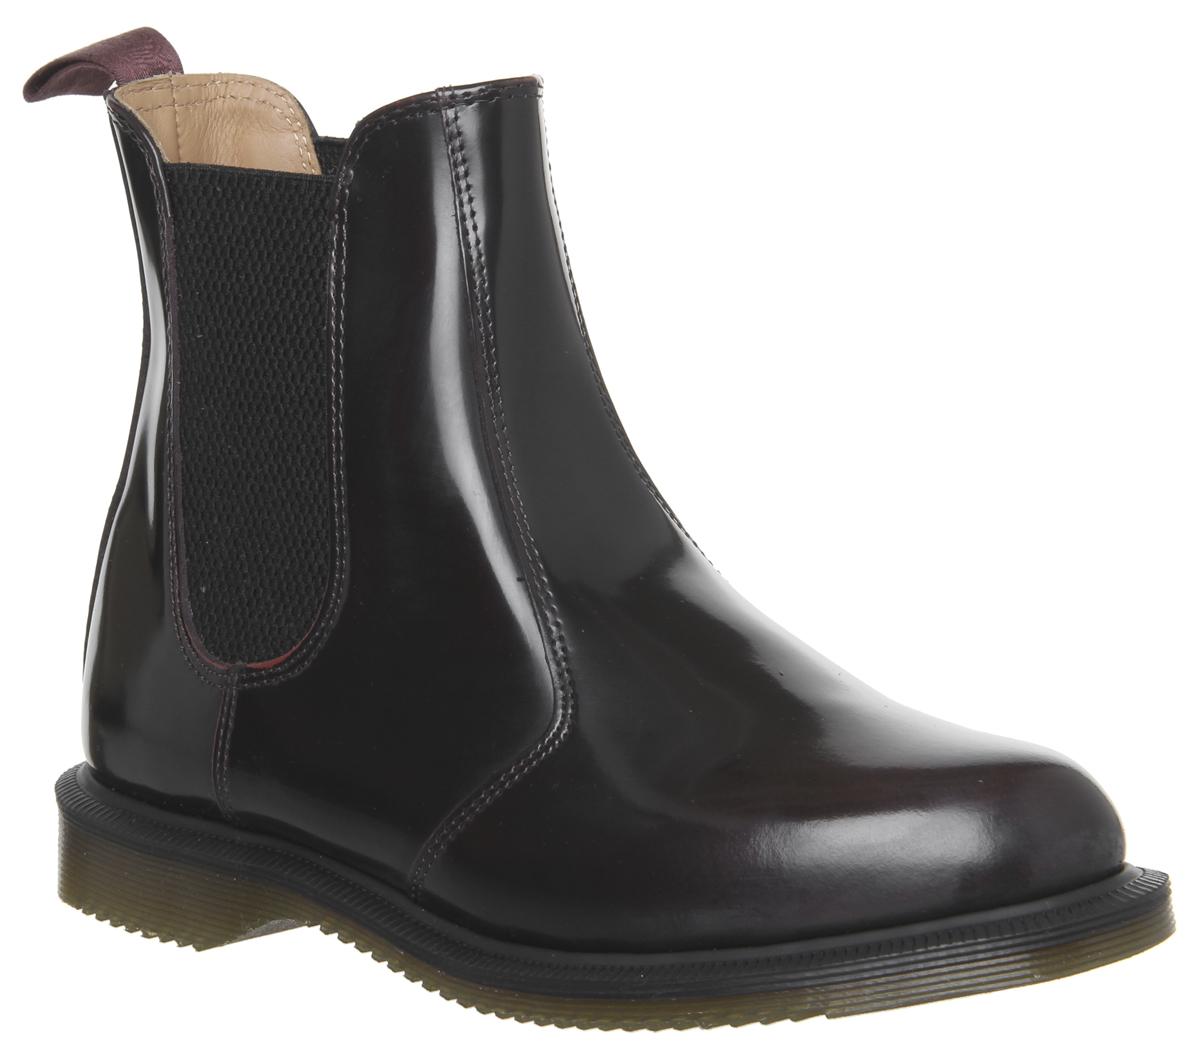 Dr. Martens Kensington Flora Boots Burgundy Leather - Ankle Boots